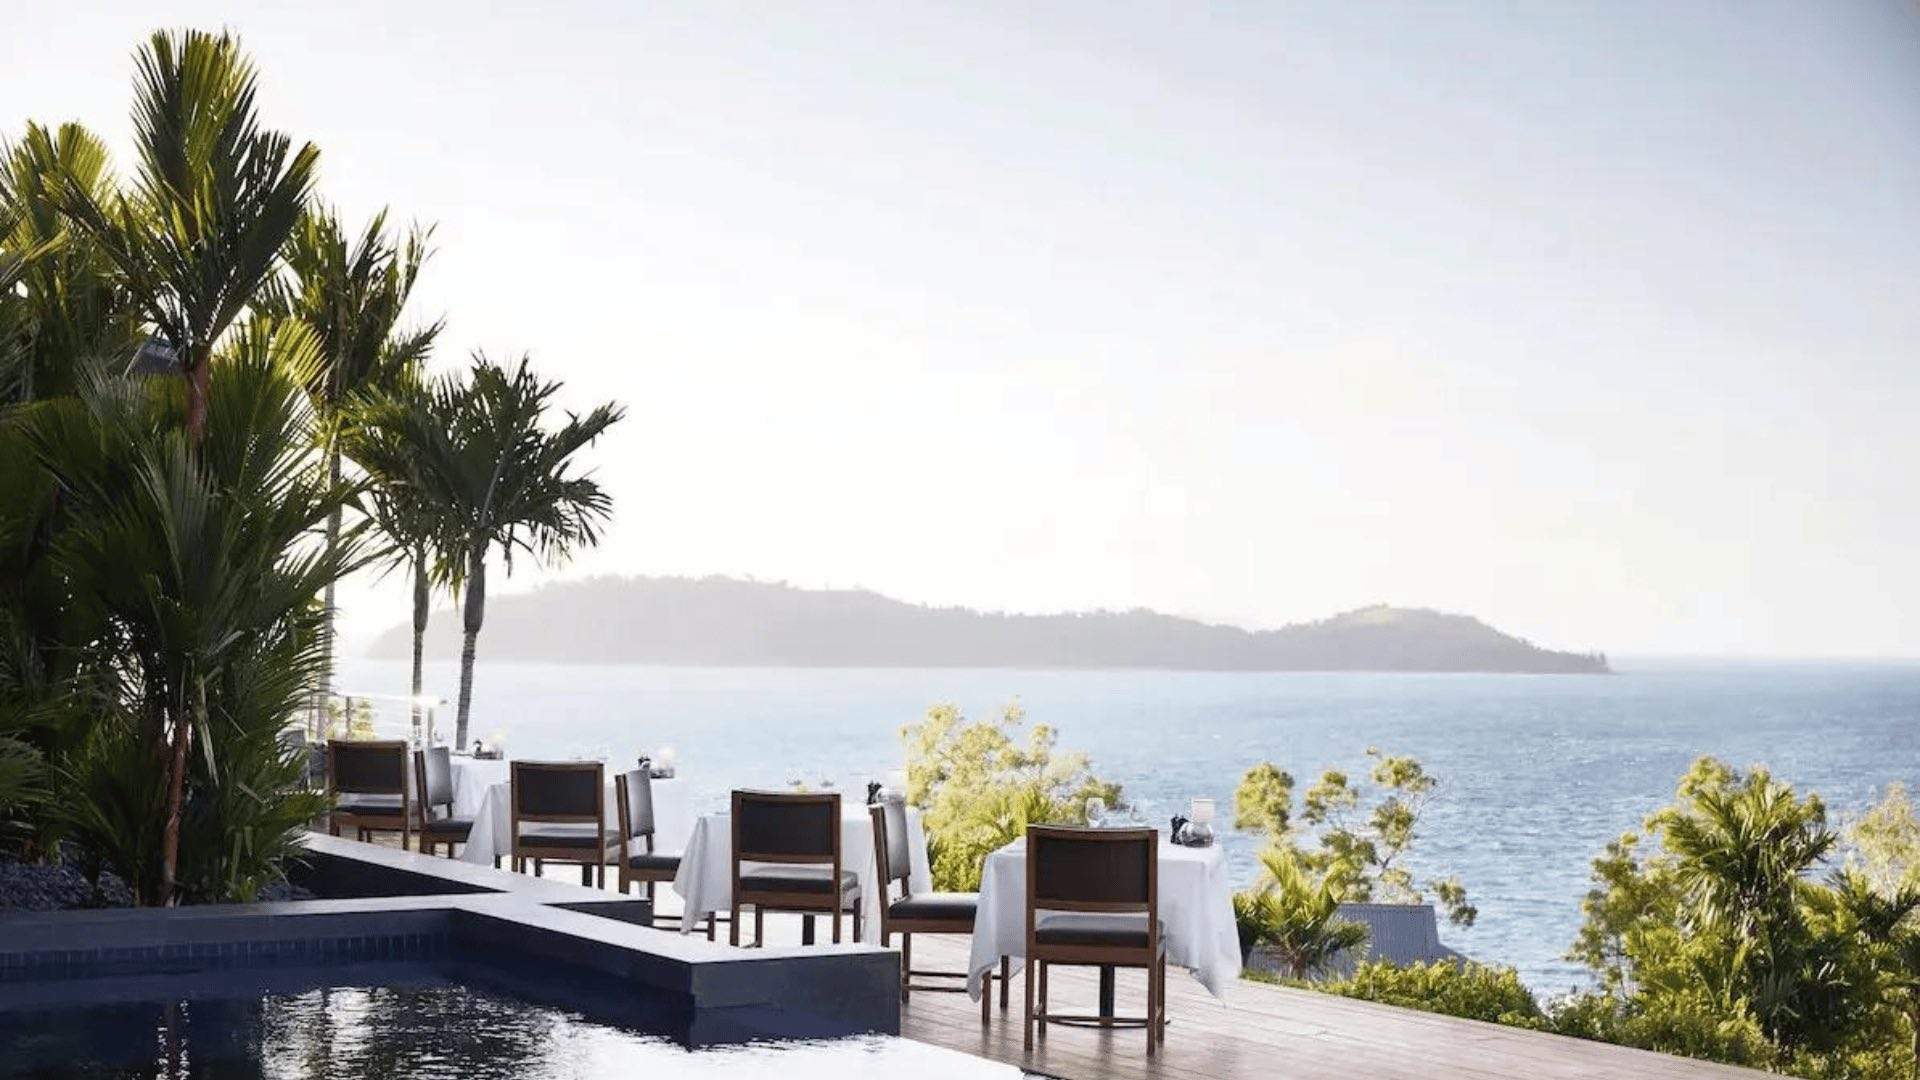 Dining tables overlooking the ocean at qualia resort on Hamilton Island.